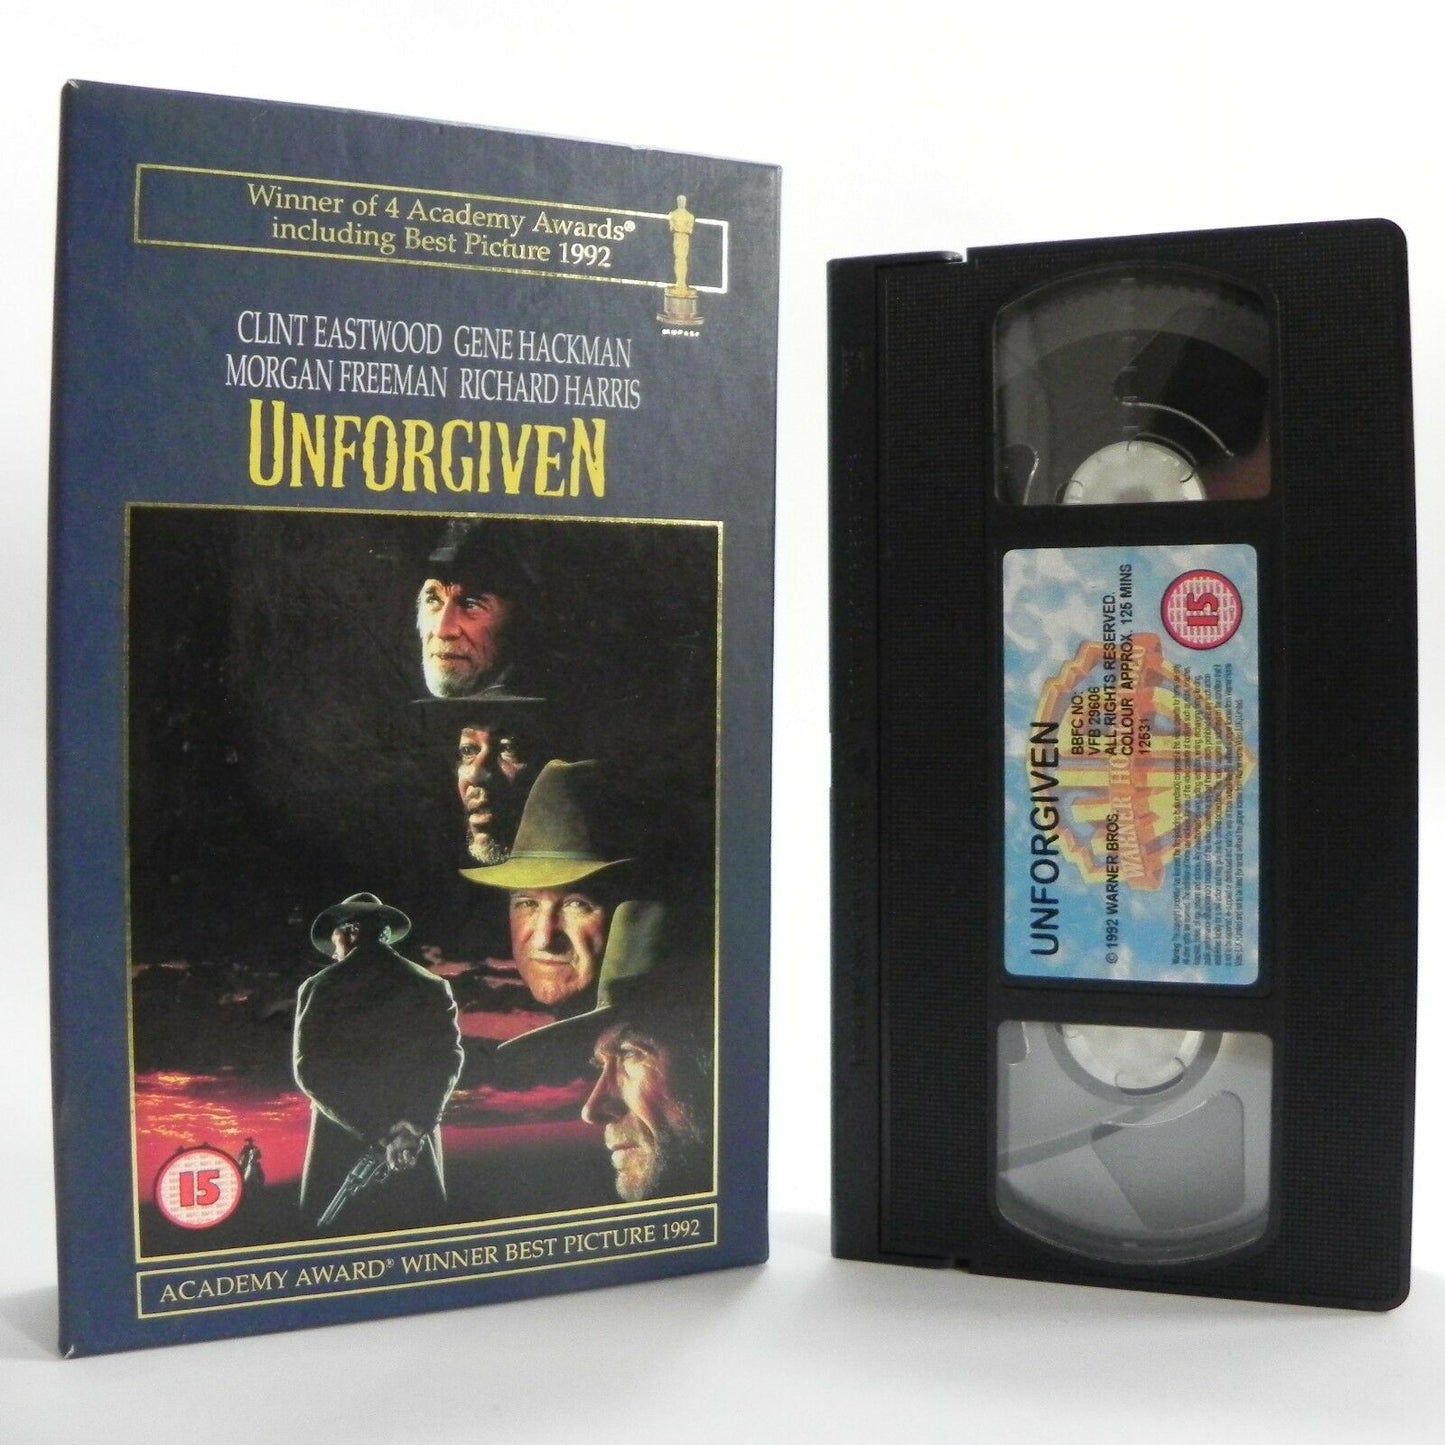 Unforgiven: Classic Western (1992) - Carton Box - C.Eastwood/G.Hackman - VHS-